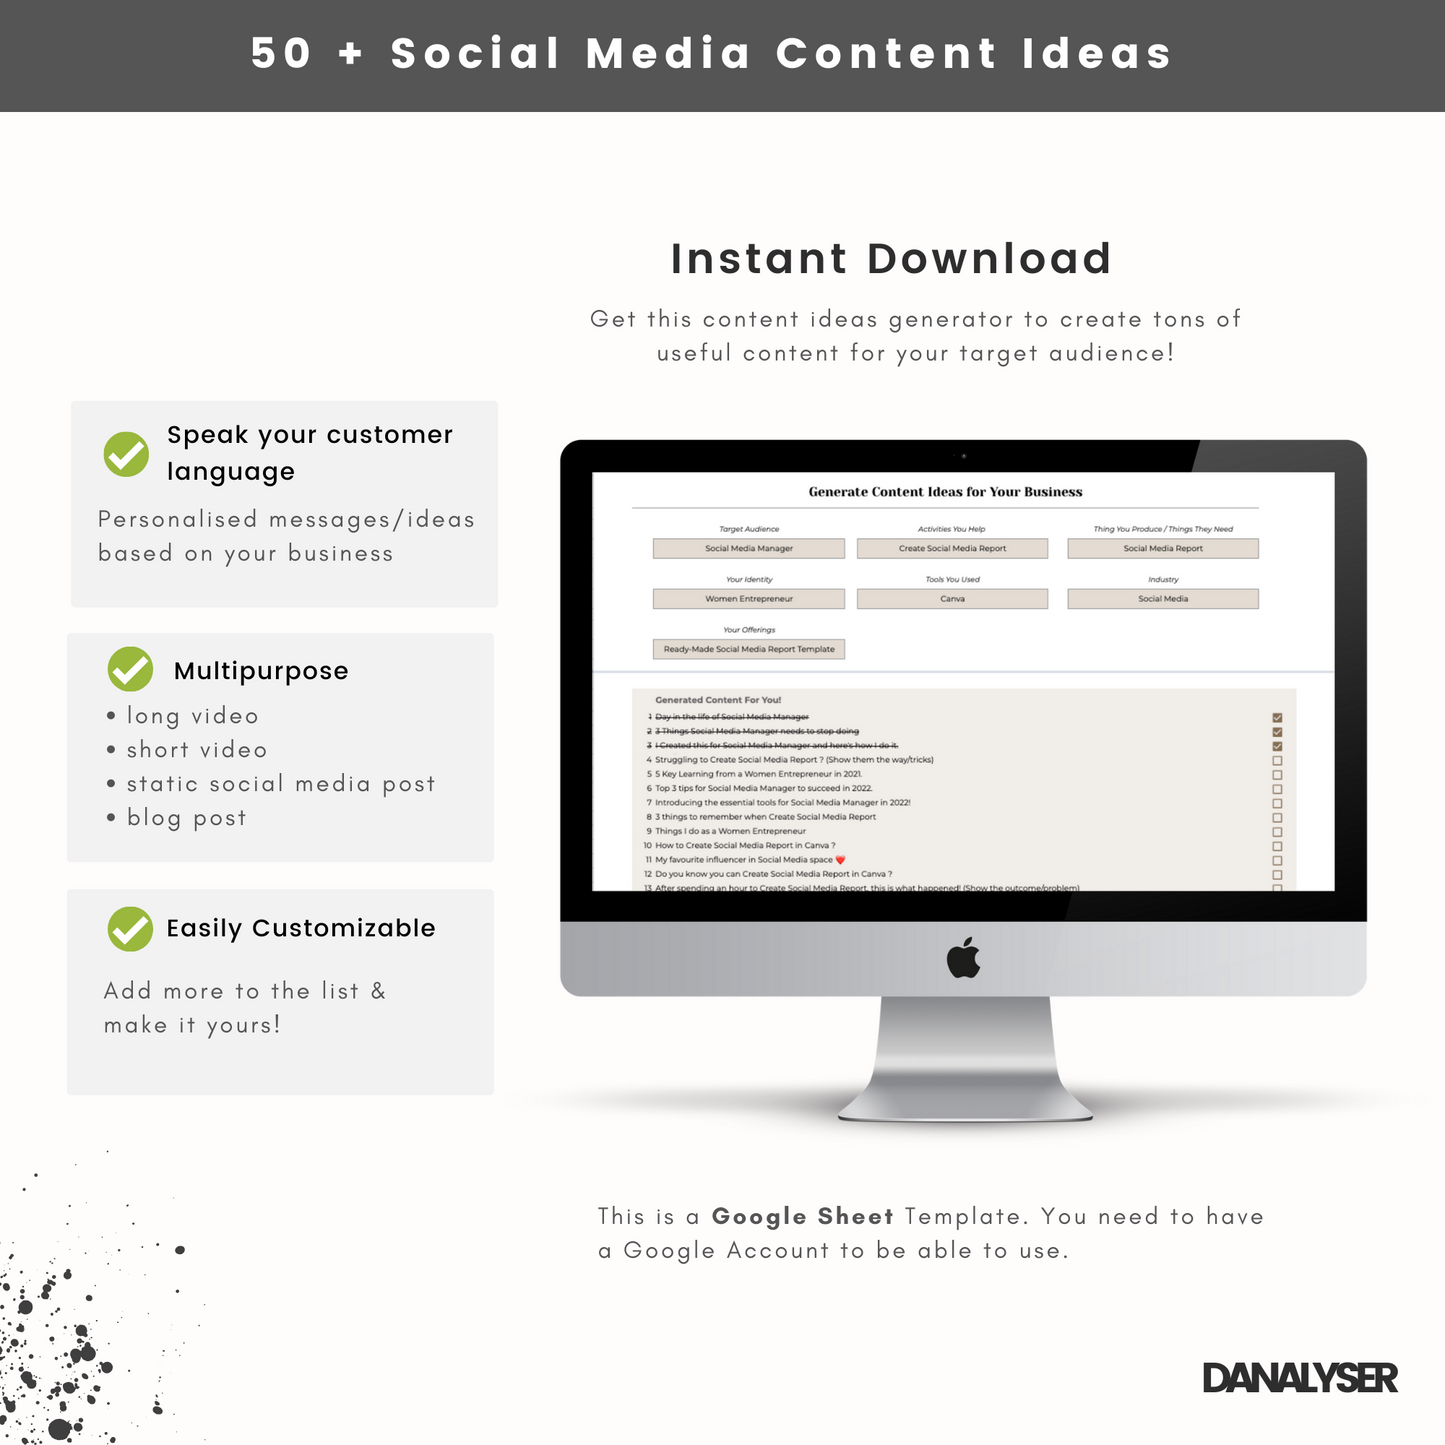 Social Media Content Ideas Generator